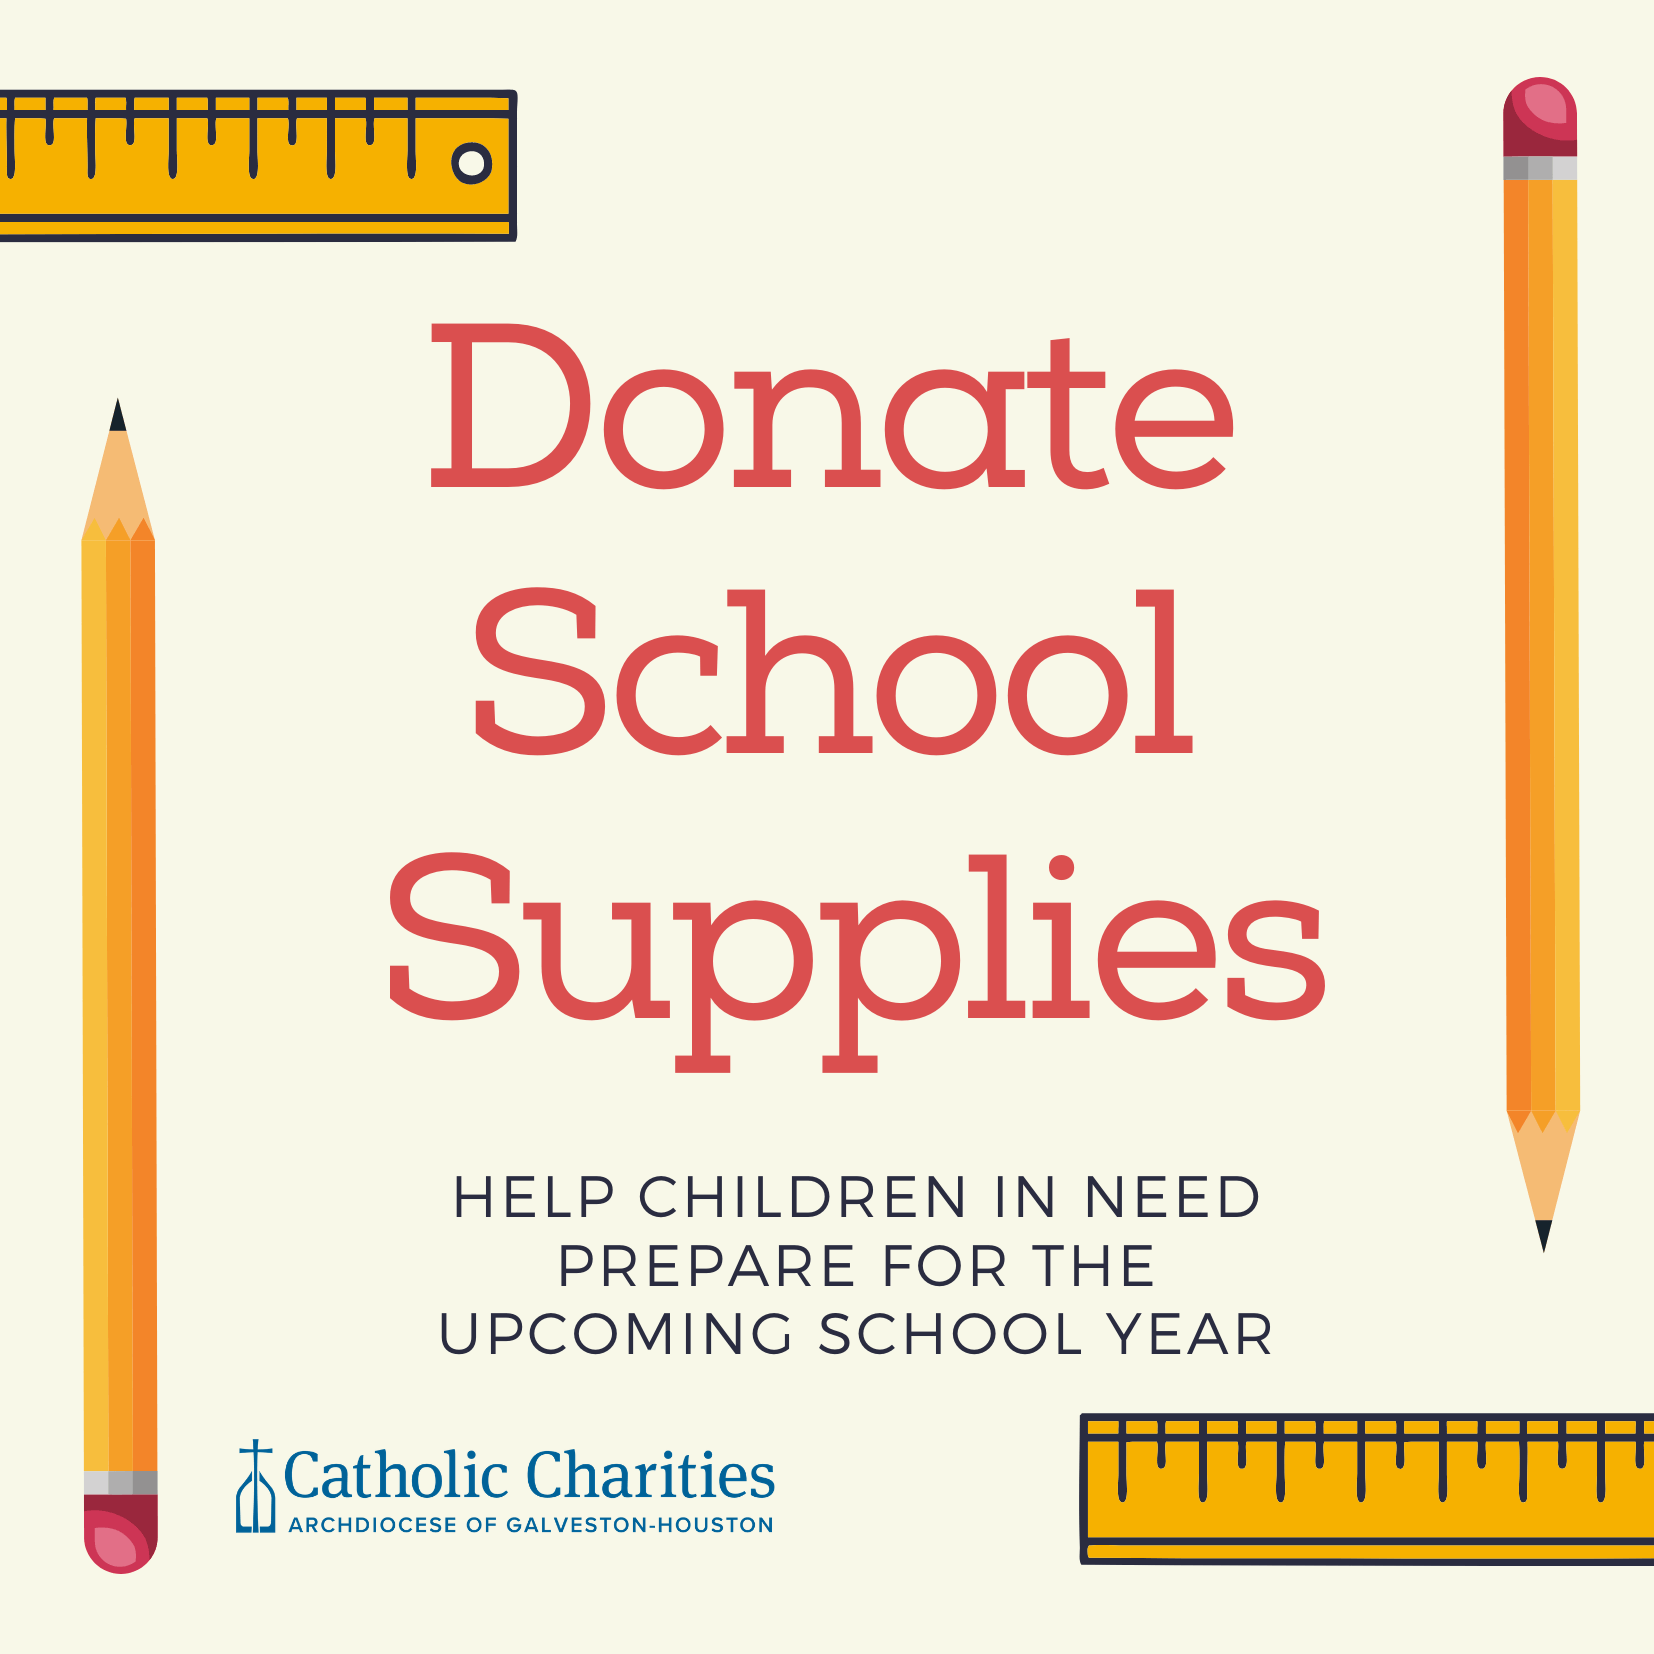 Donate school supplies and help children in need head back to school!